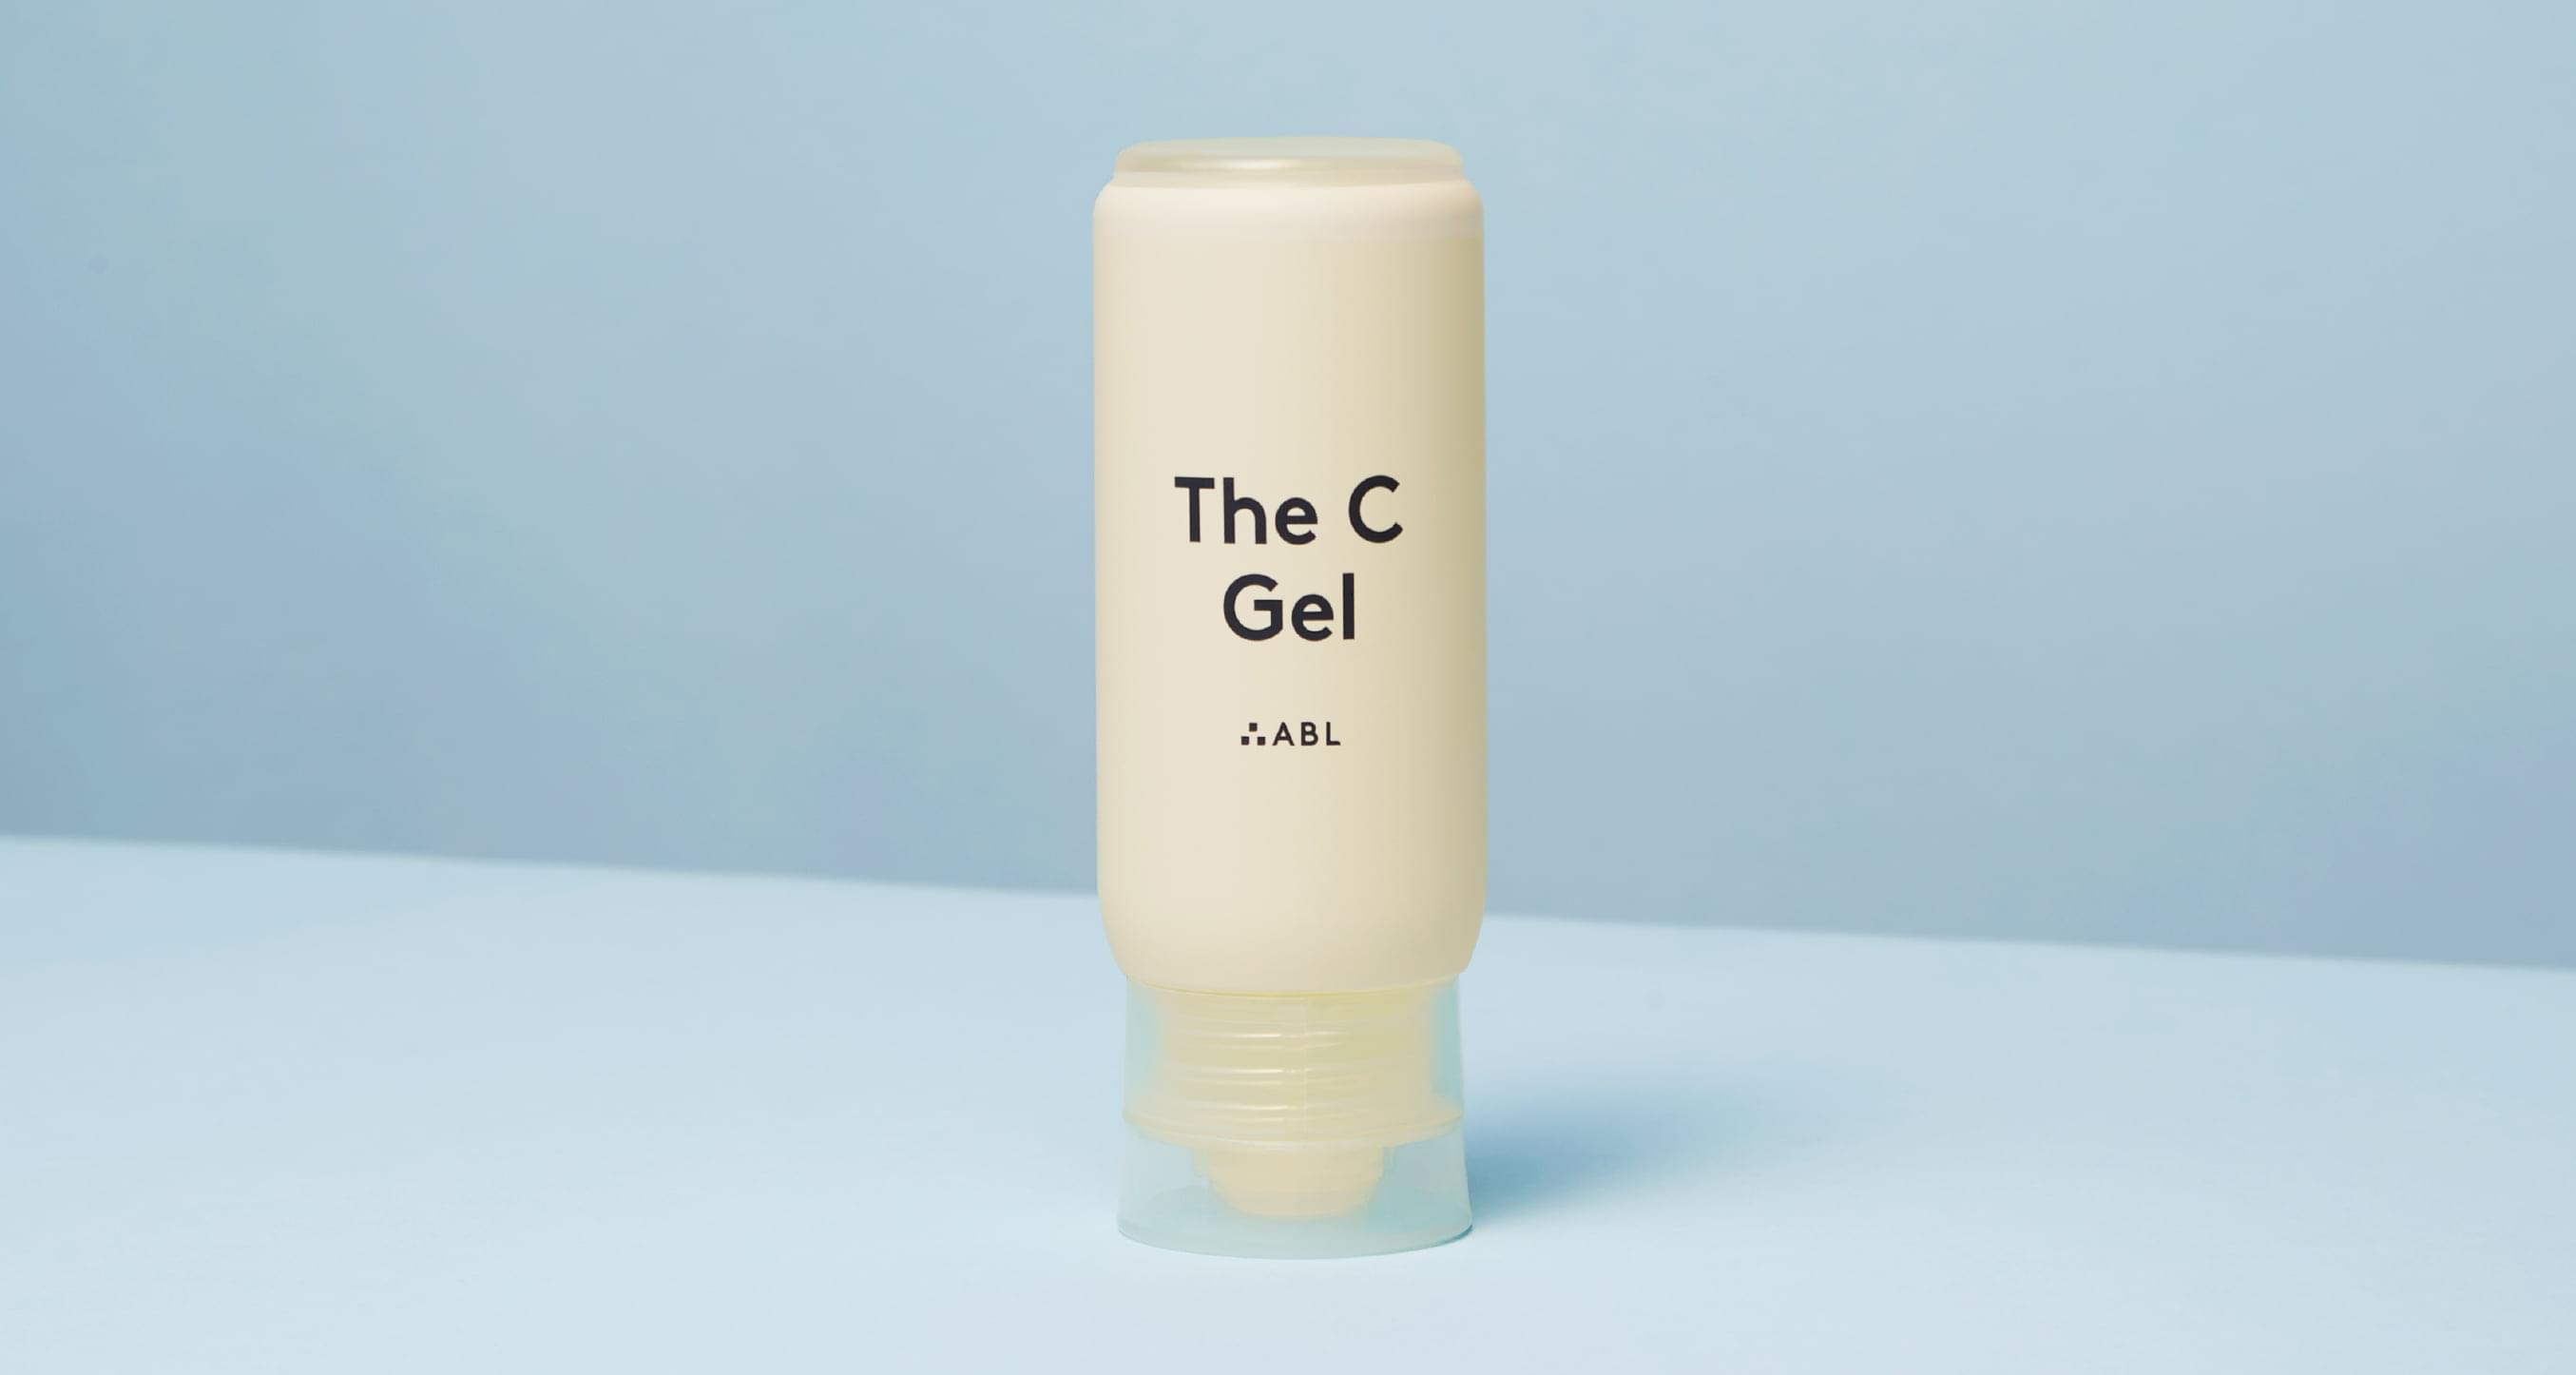 The C Gel